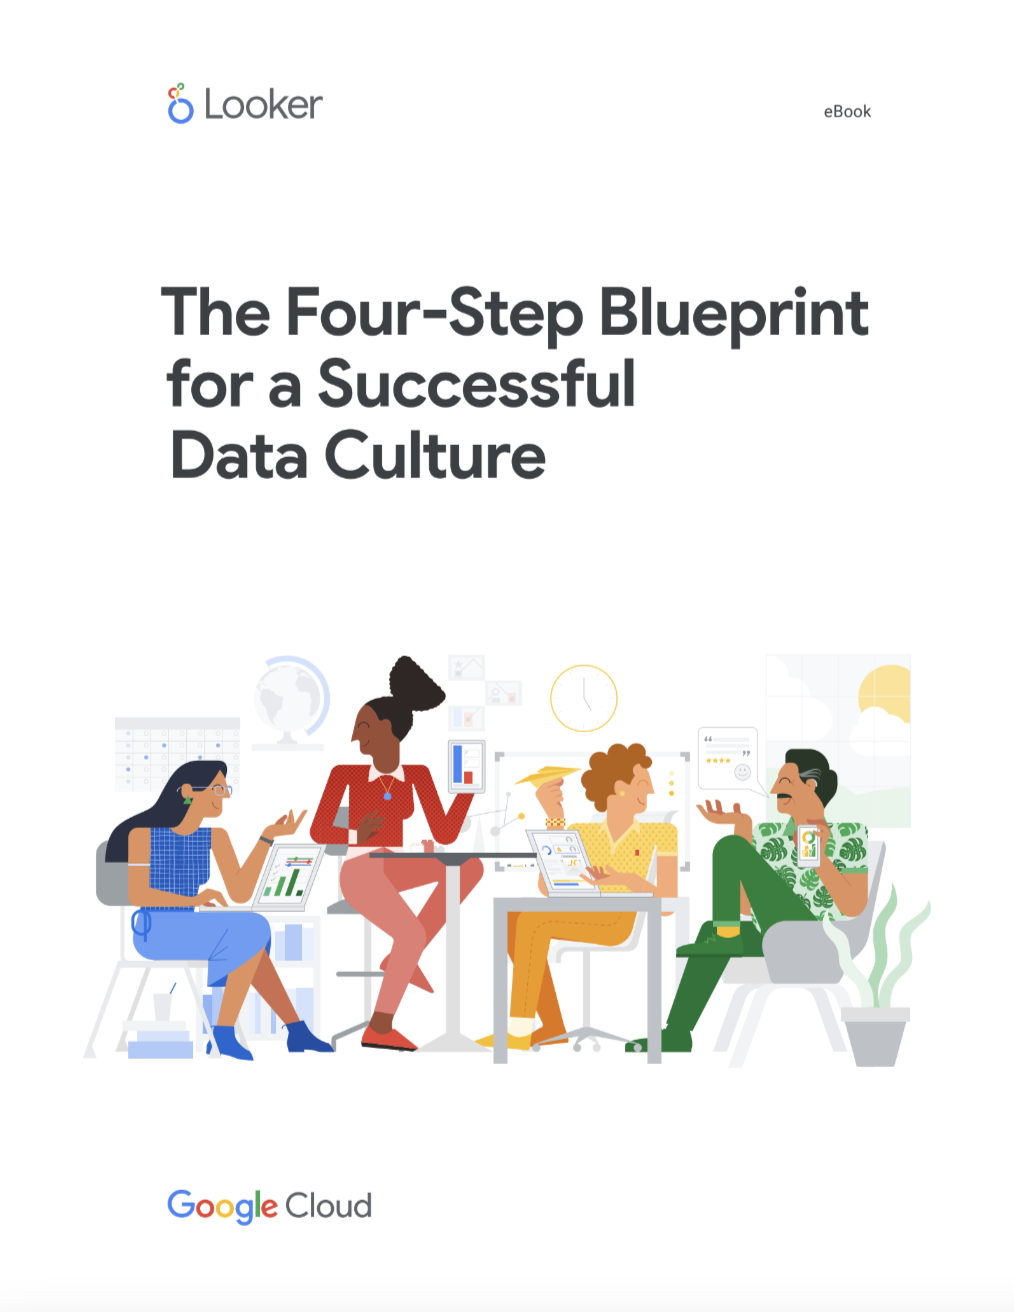 Vorschau Whitepaper “The Four-Step Blueprint for a Successful Data Culture“